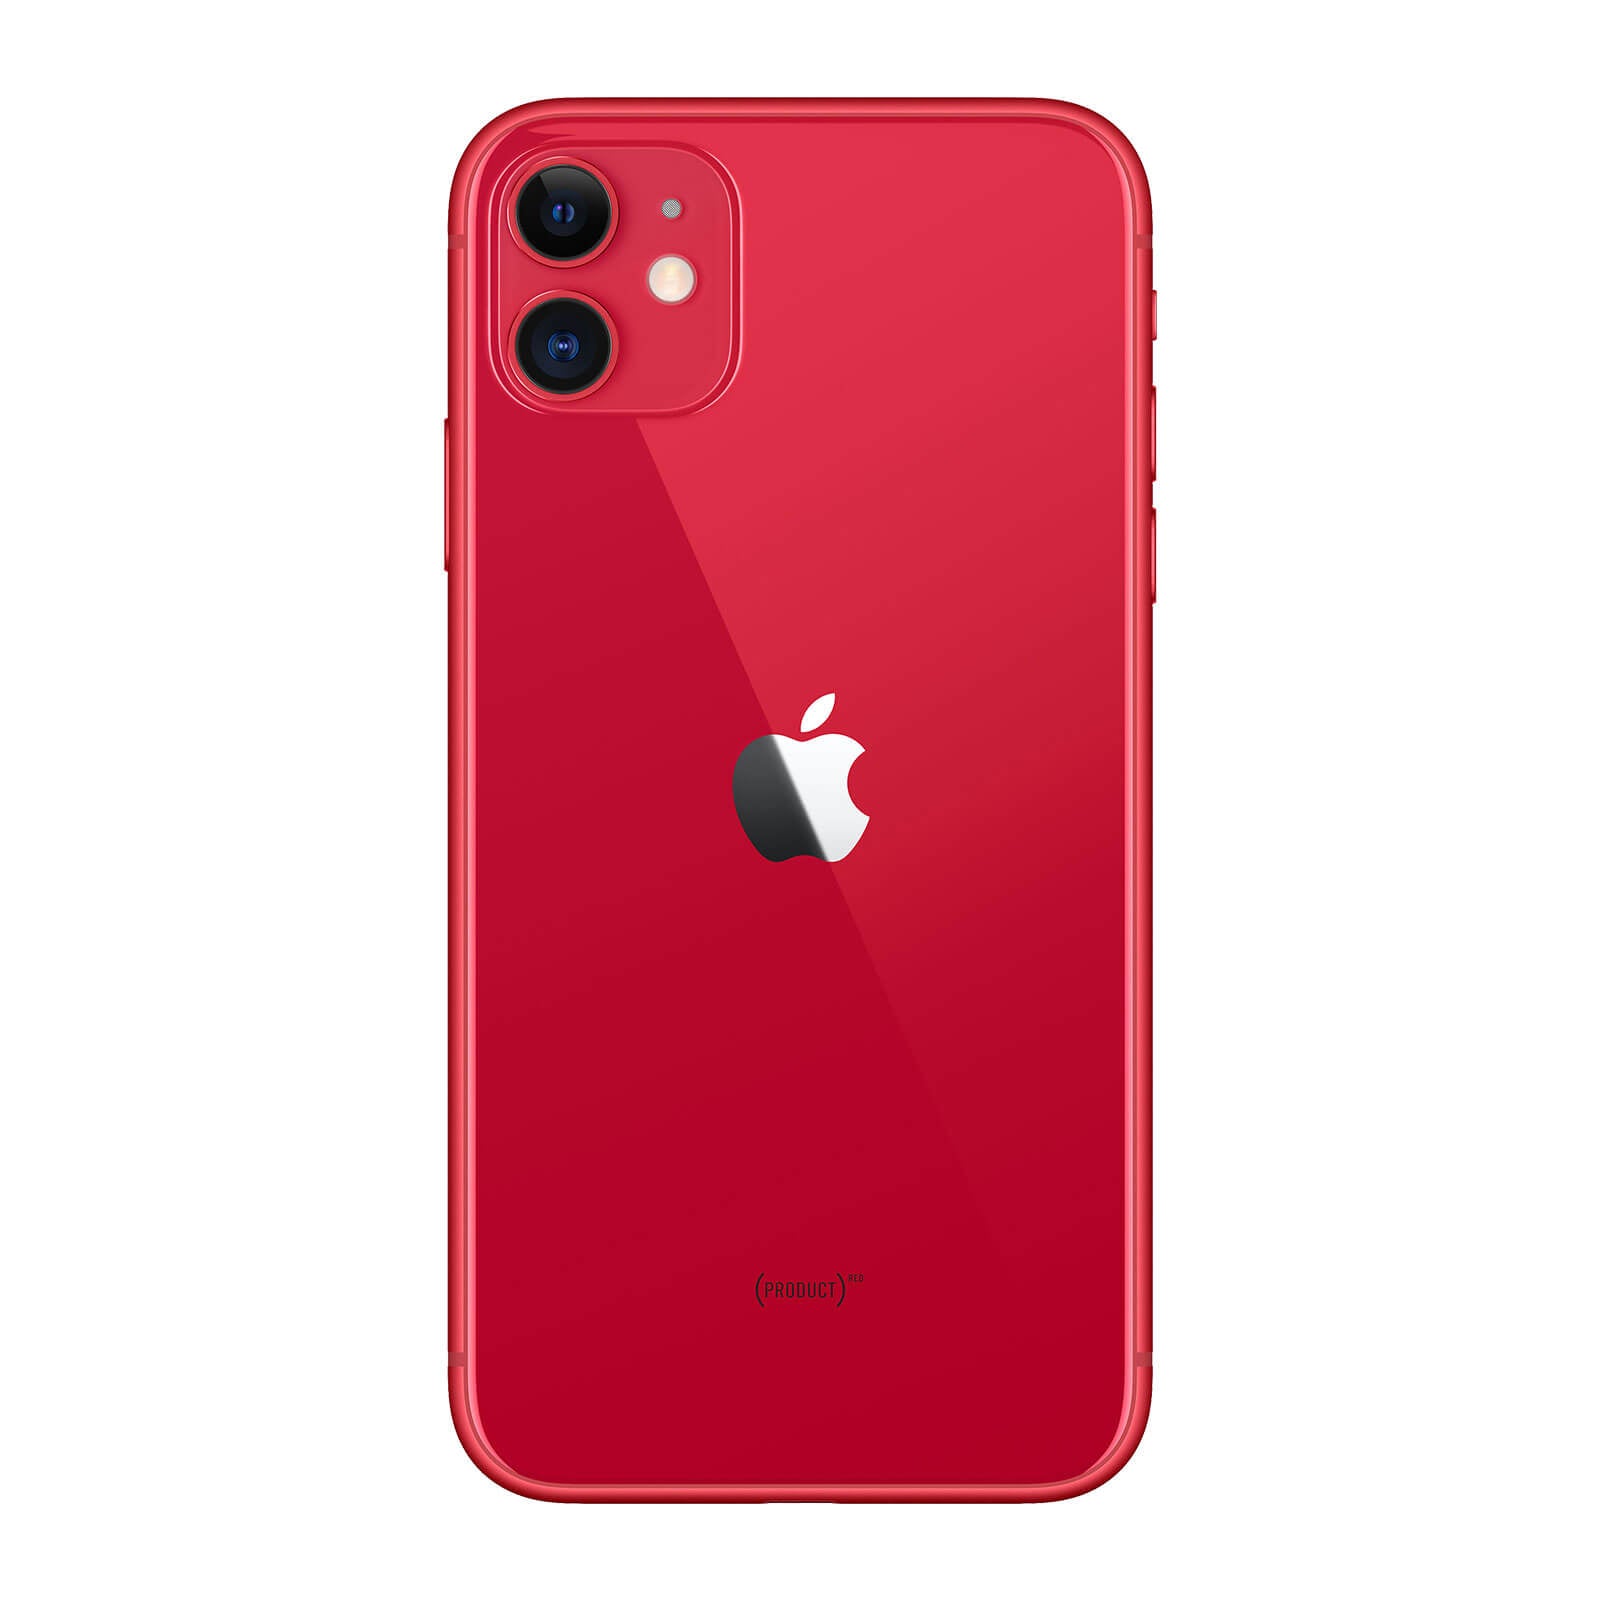 Apple iPhone 11 128GB Red Good - Unlocked